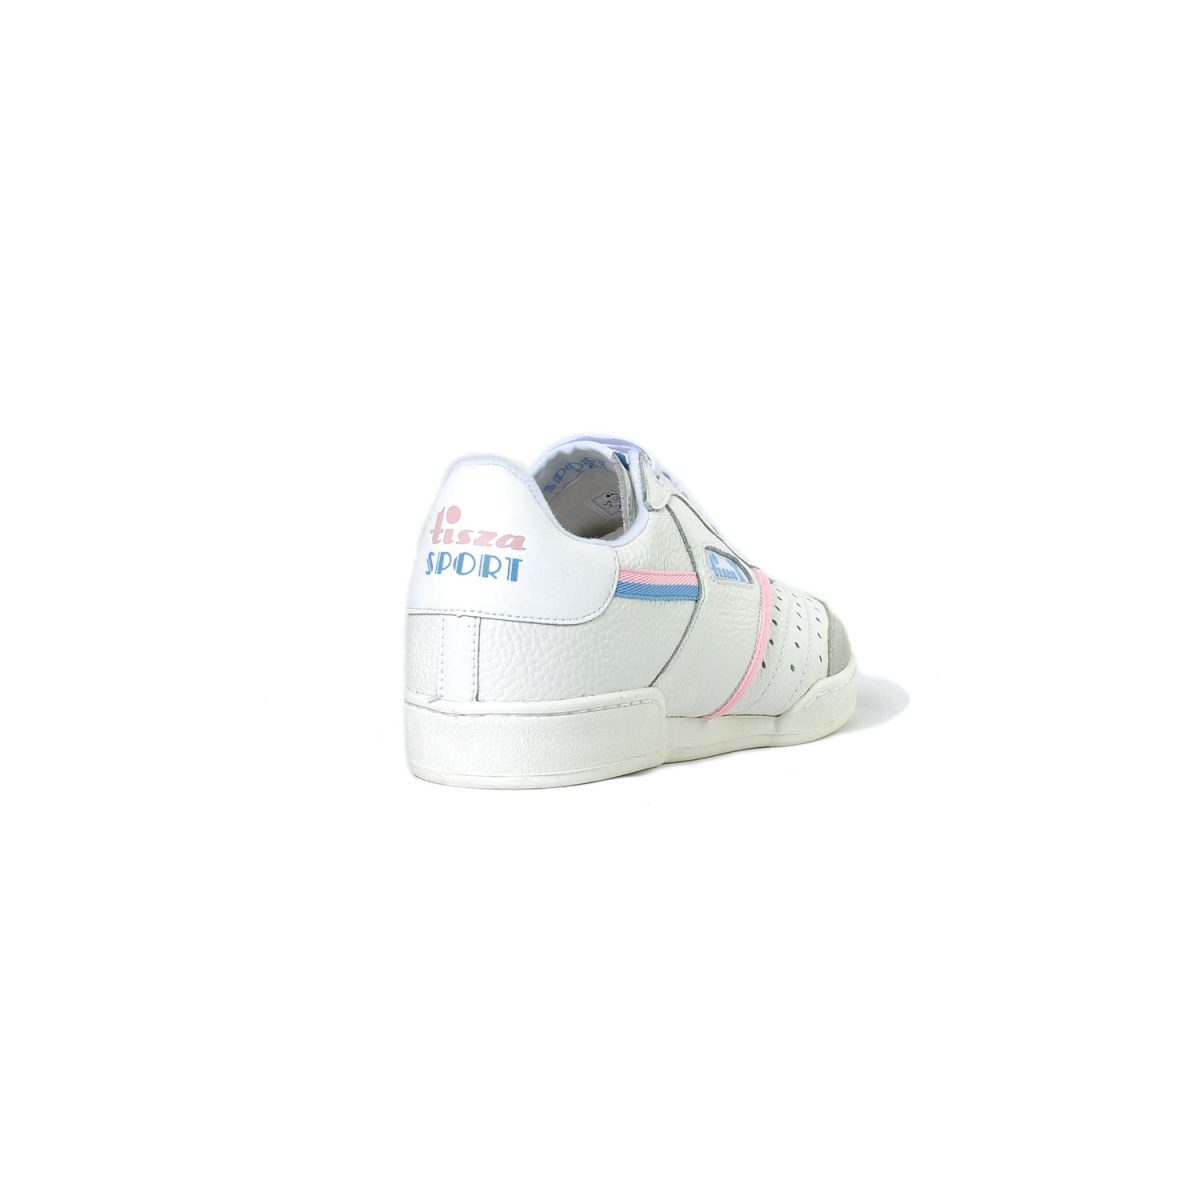 Tisza shoes - Sport - White-blue-pink